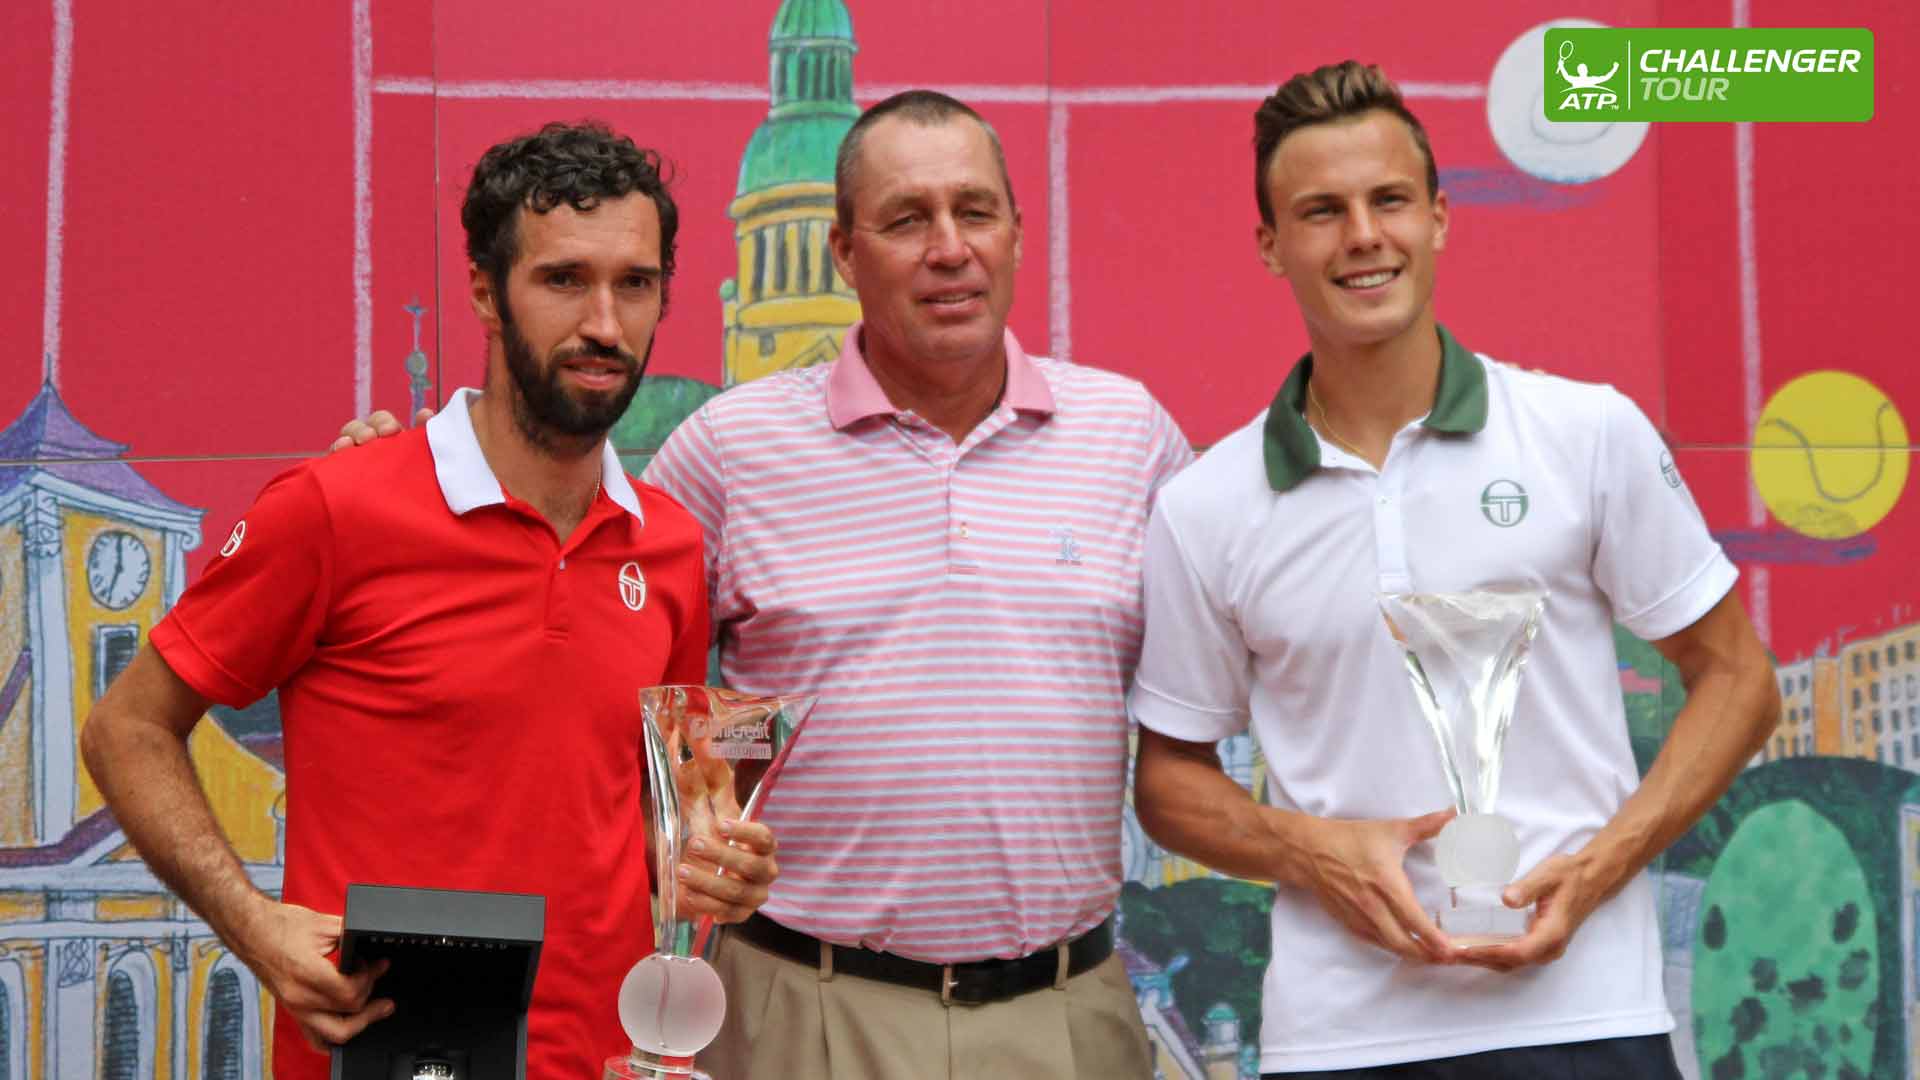 Ivan Lendl presents Mikhail Kukushin (L) and Martin Fucsovics with their trophies in Prostejov.